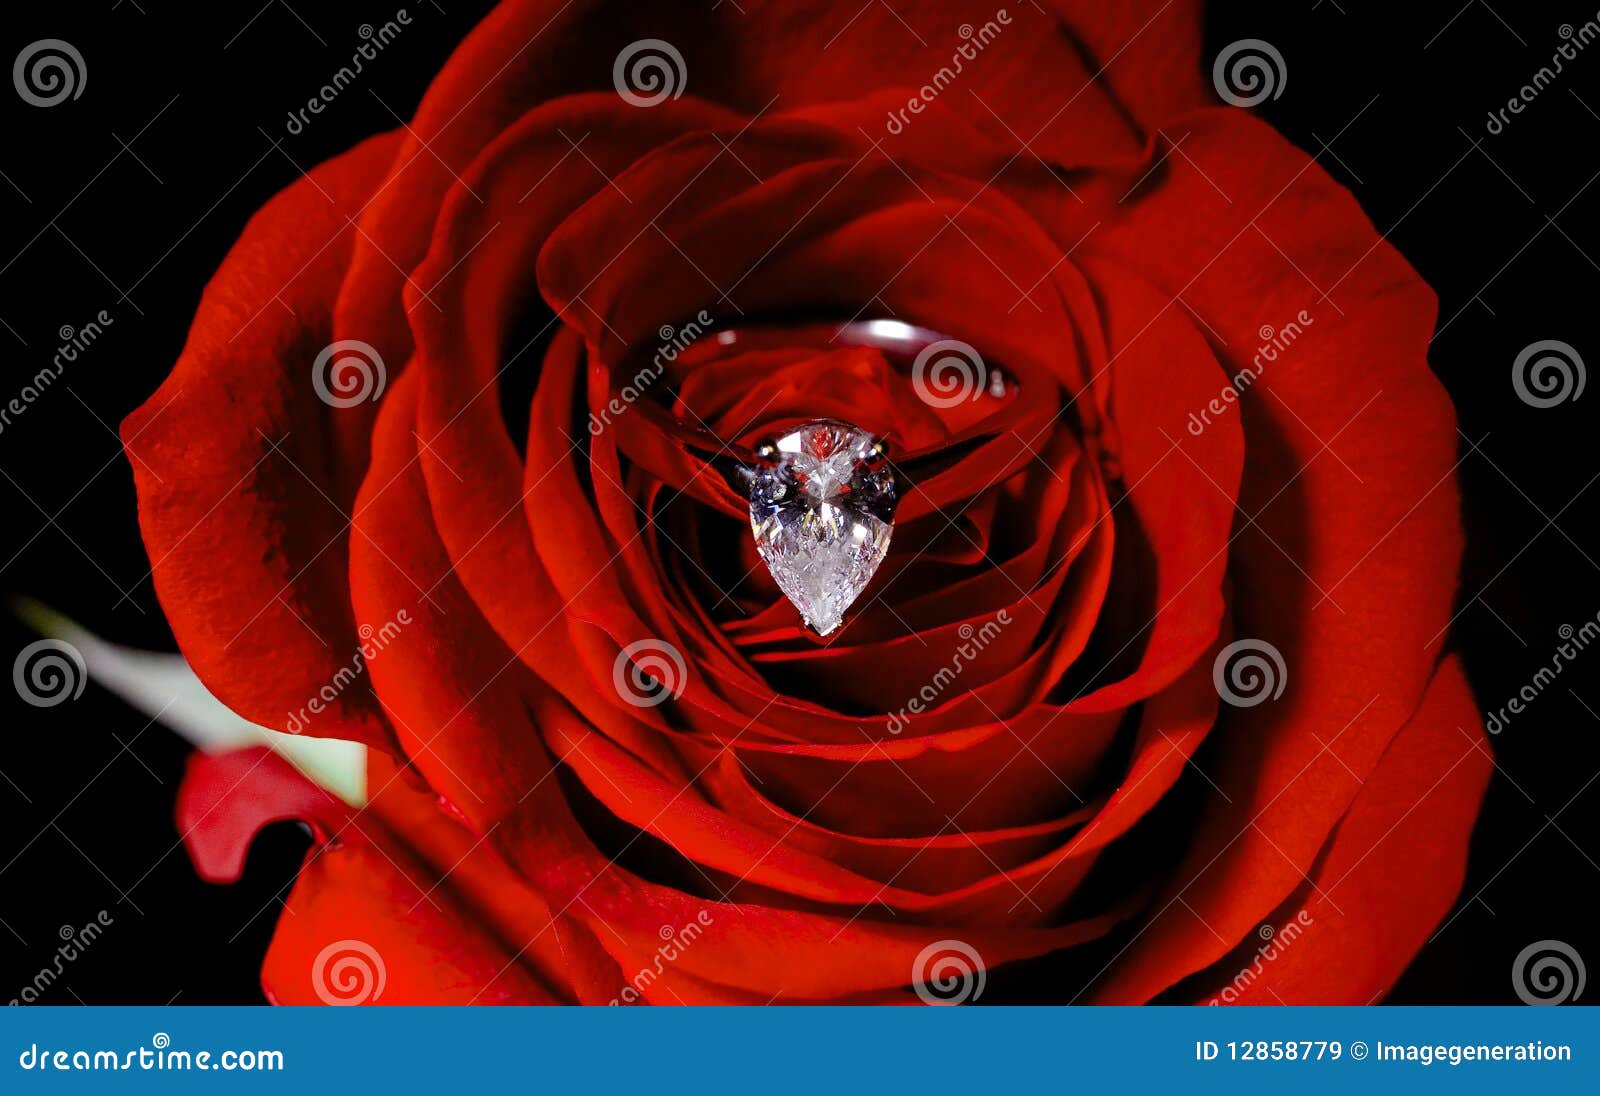 Acrylic clear with rose inside ring holder for bathroom, dresser | eBay